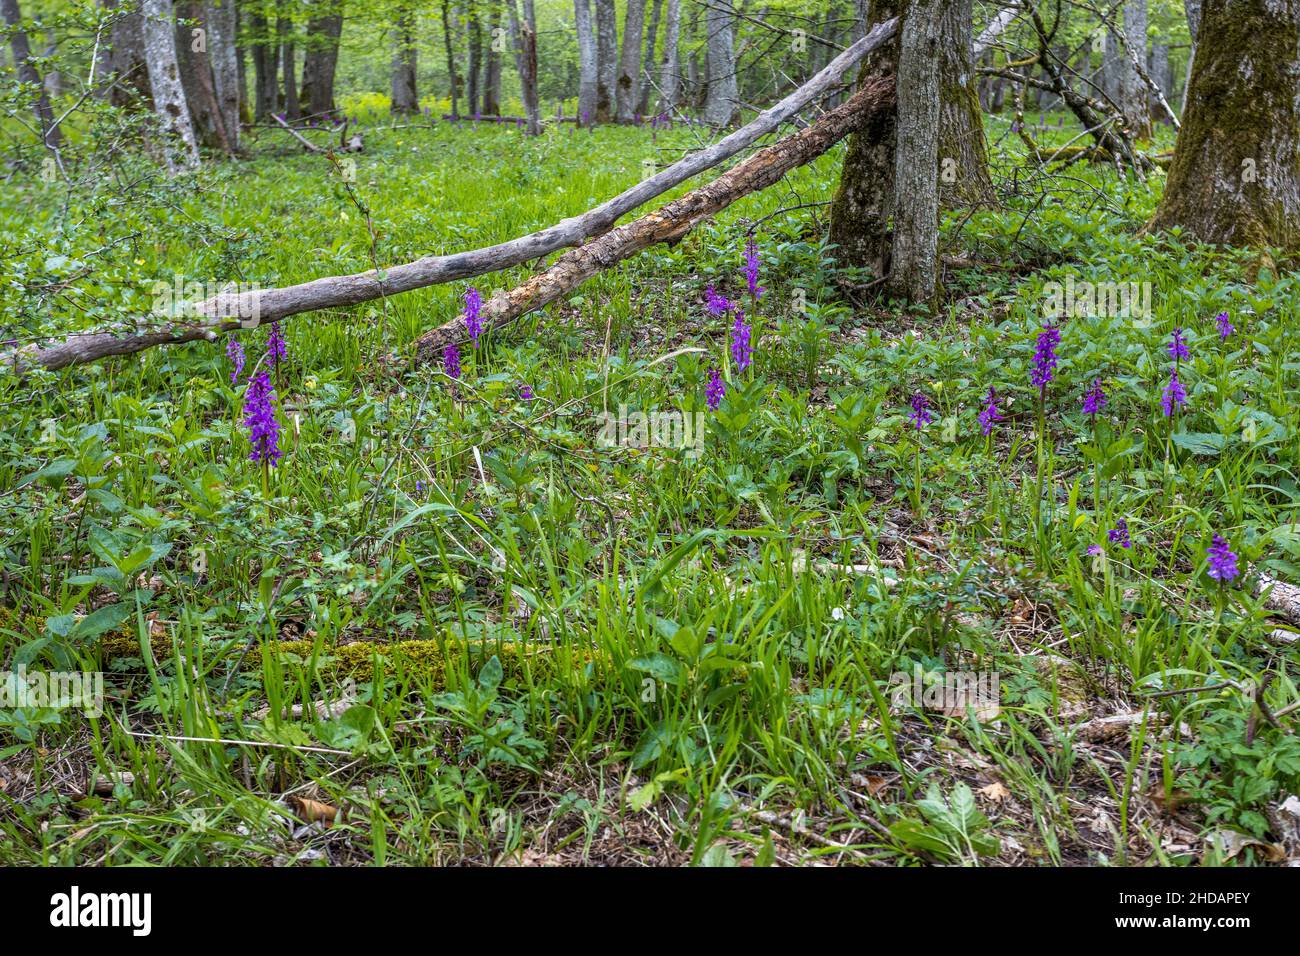 Mannsknabenkraut (Orchis mascula) Stock Photo